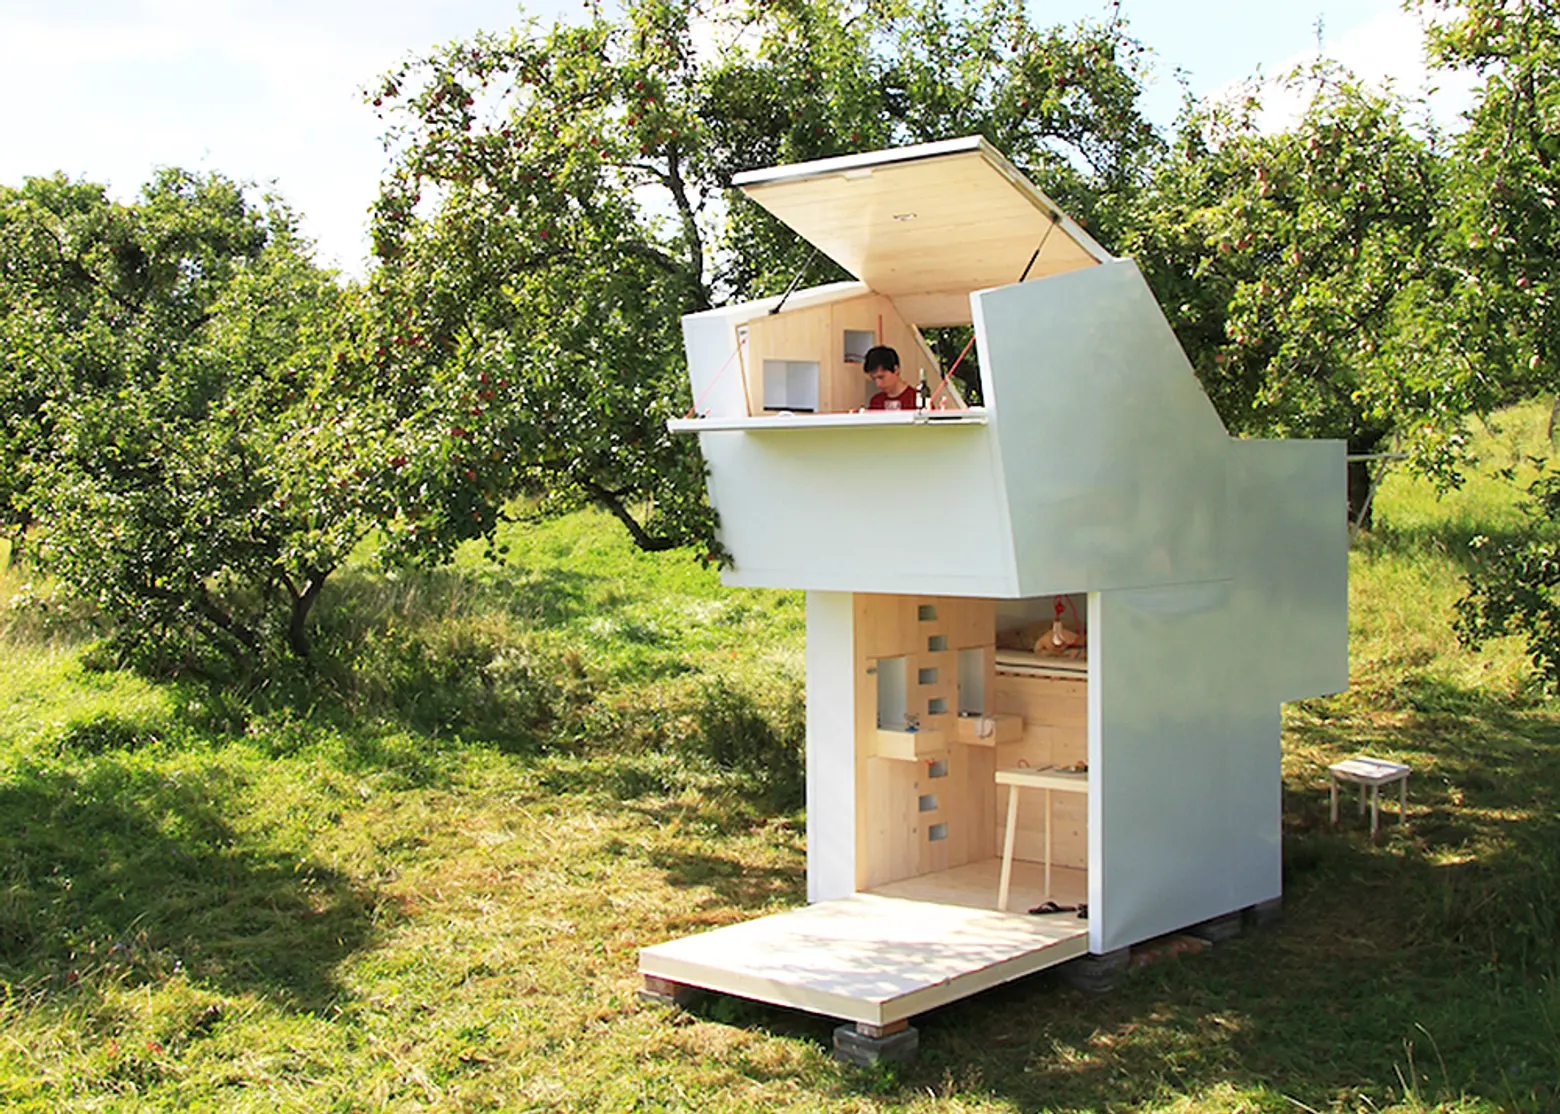 Studio Allergutendinge’s Soul Box is a Portable Retreat for ‘Glamping’ in Nature